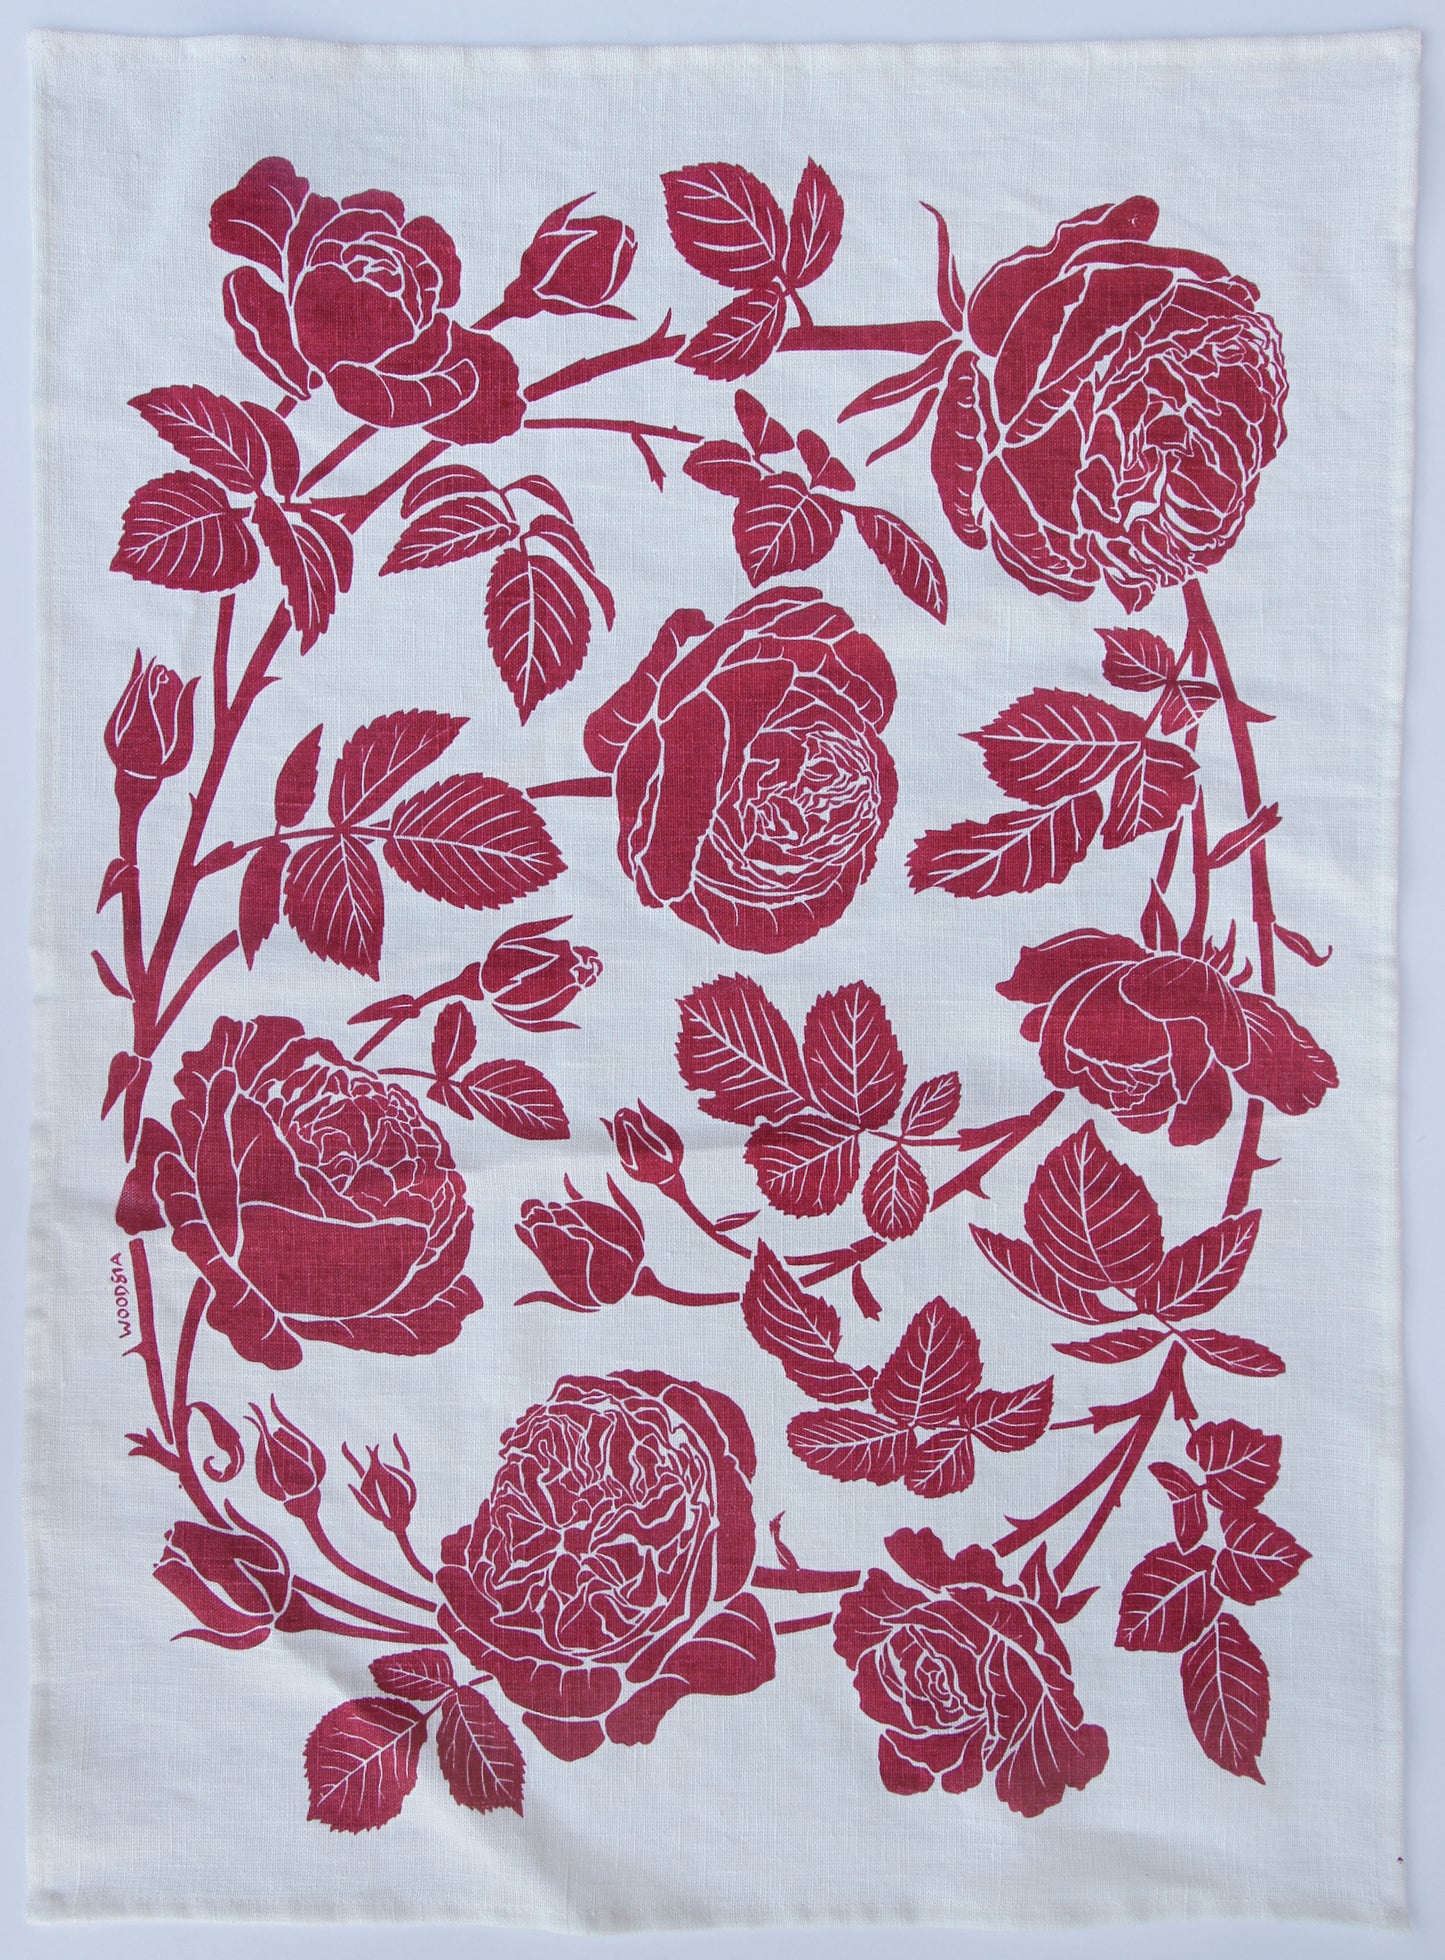 Garden Rose in Gentle Pink on White Linen